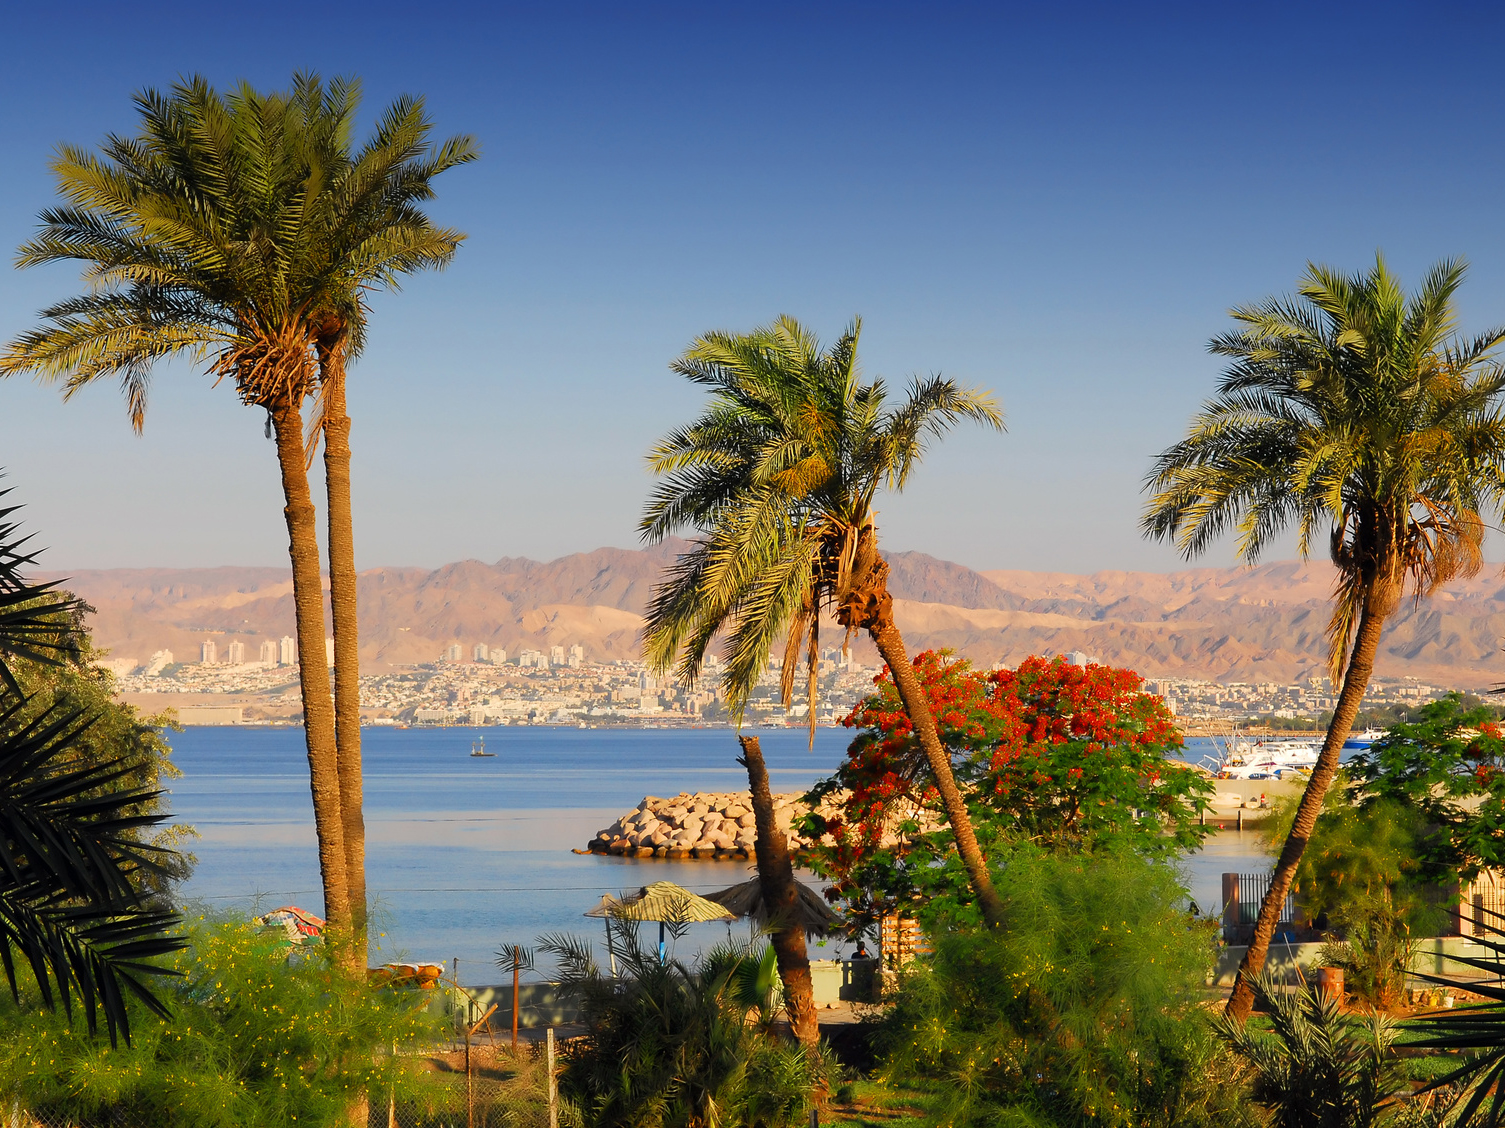 Day 6 - The Red Desert & coastal Aqaba